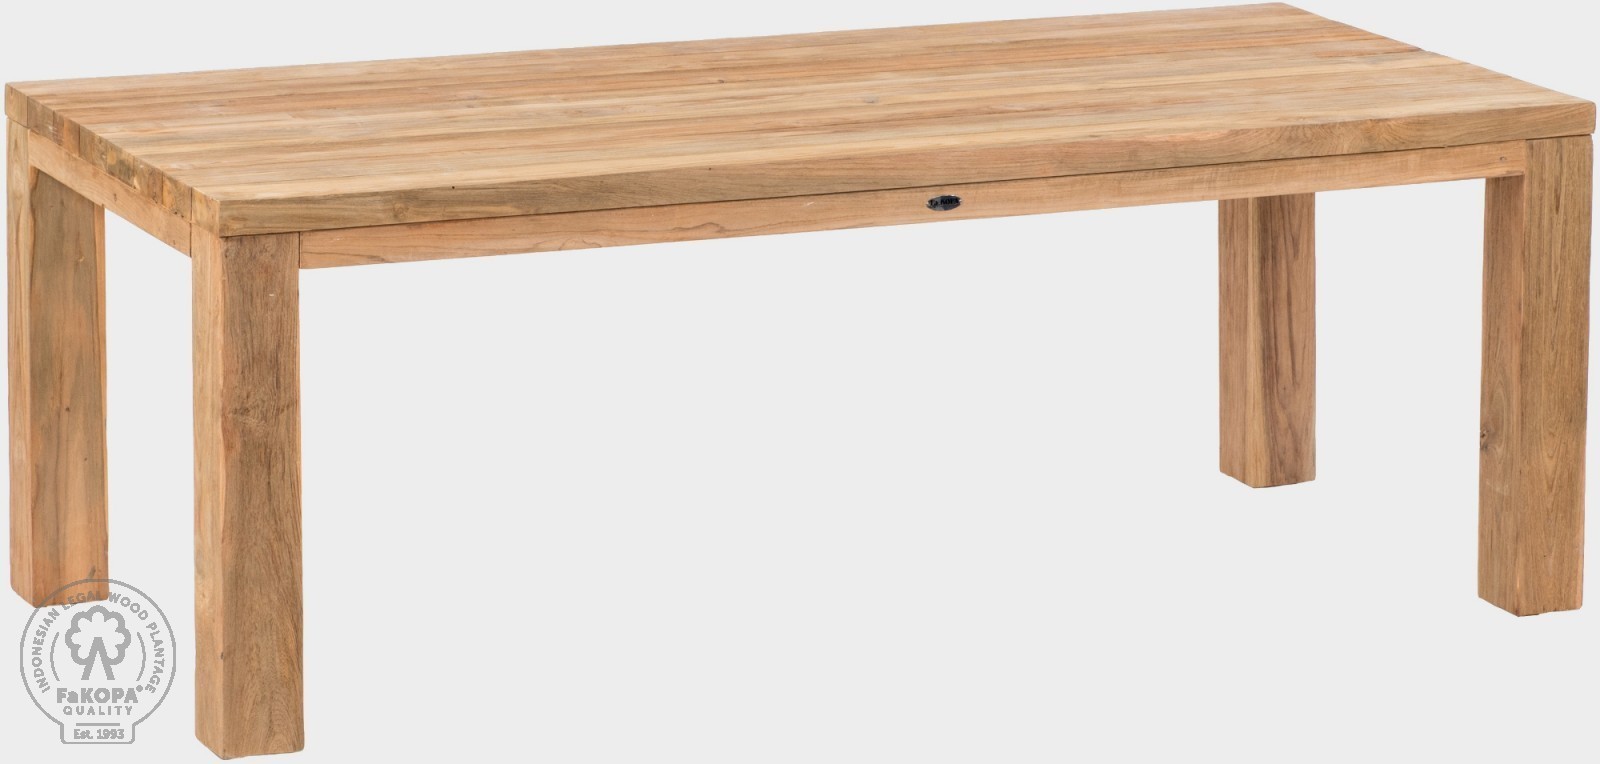 FaKOPA s. r. o. FLOSS RECYCLE - masivní stůl z recyklovaného teaku 250 x 100 cm (deska z prken), teak